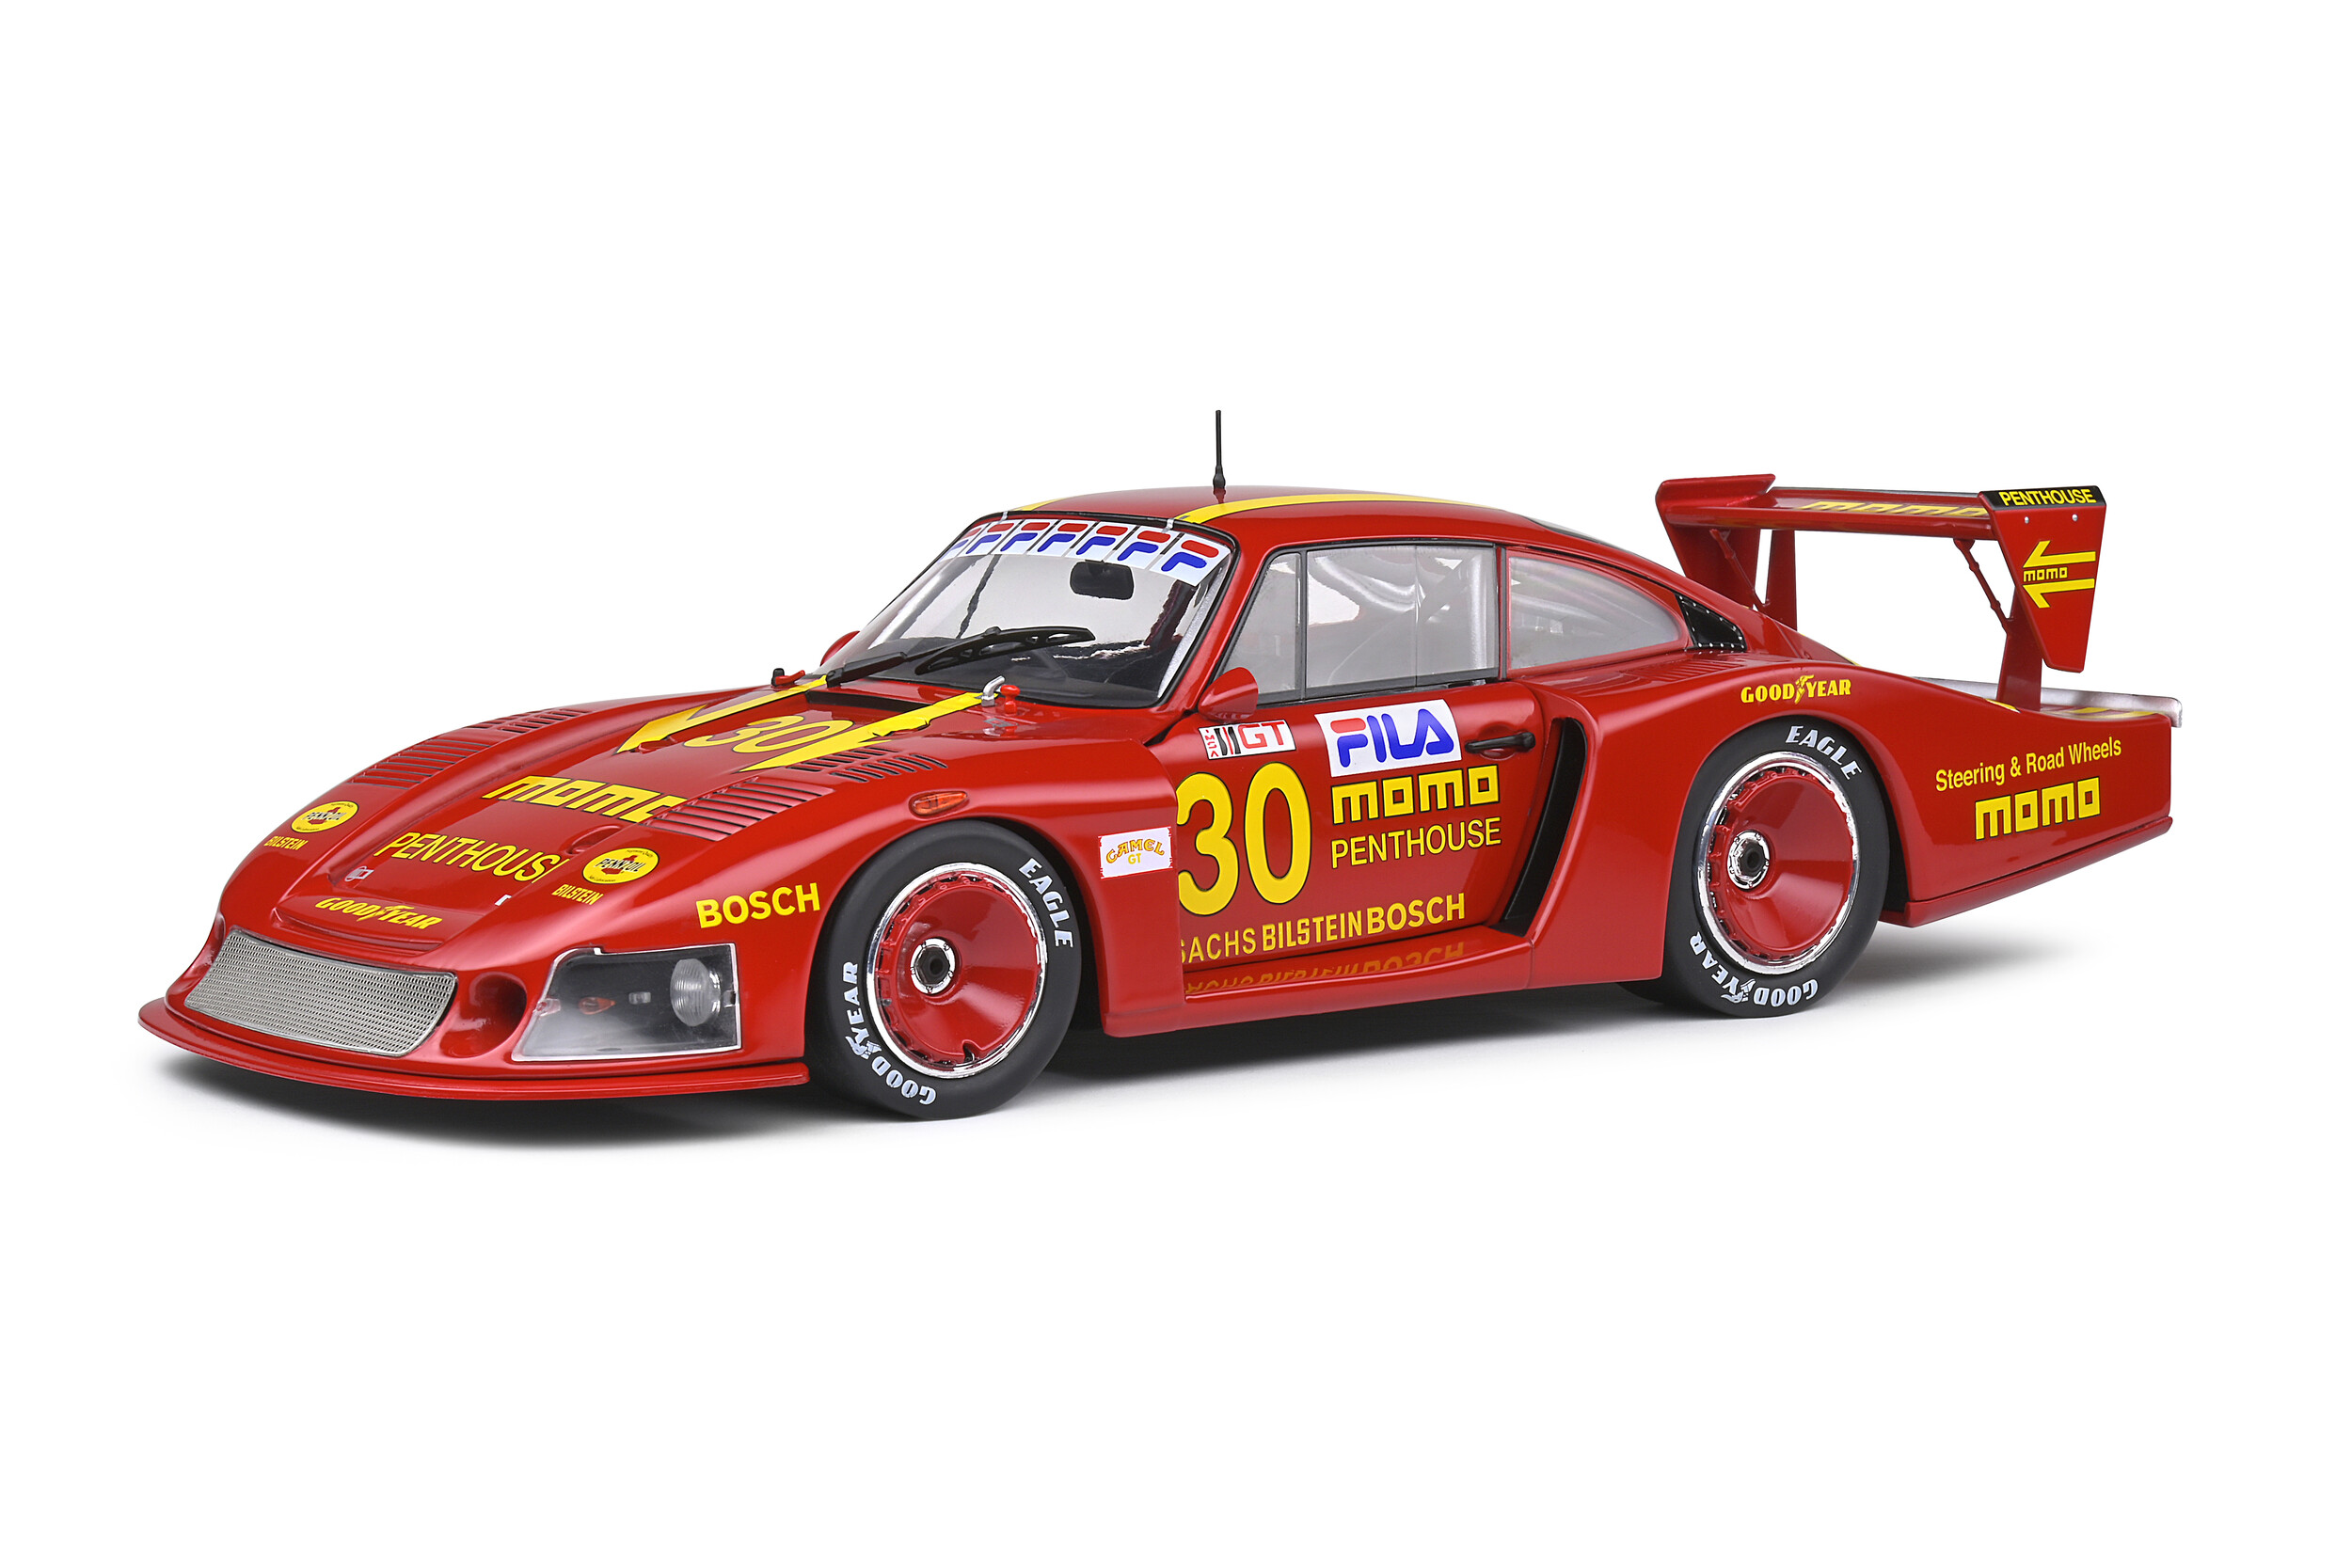 Solido 1:18 Porsche 935 Moby Dick #30 Momo S1805403 Diecast Model Car Red